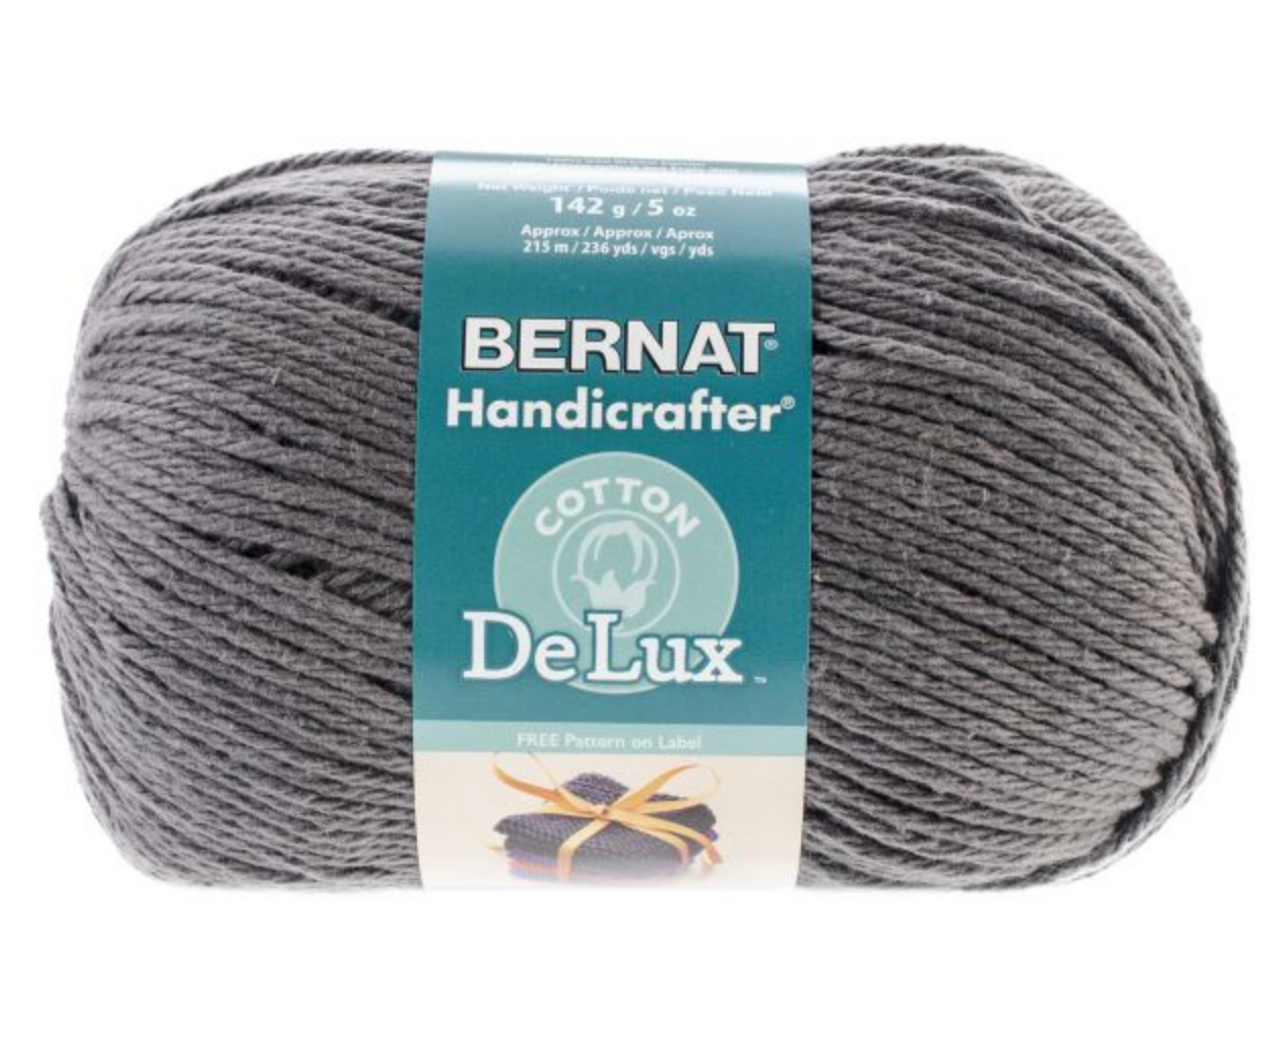 Bernat Handicrafter Delux Cotton Rustic Gray Knitting & Crochet Yarn